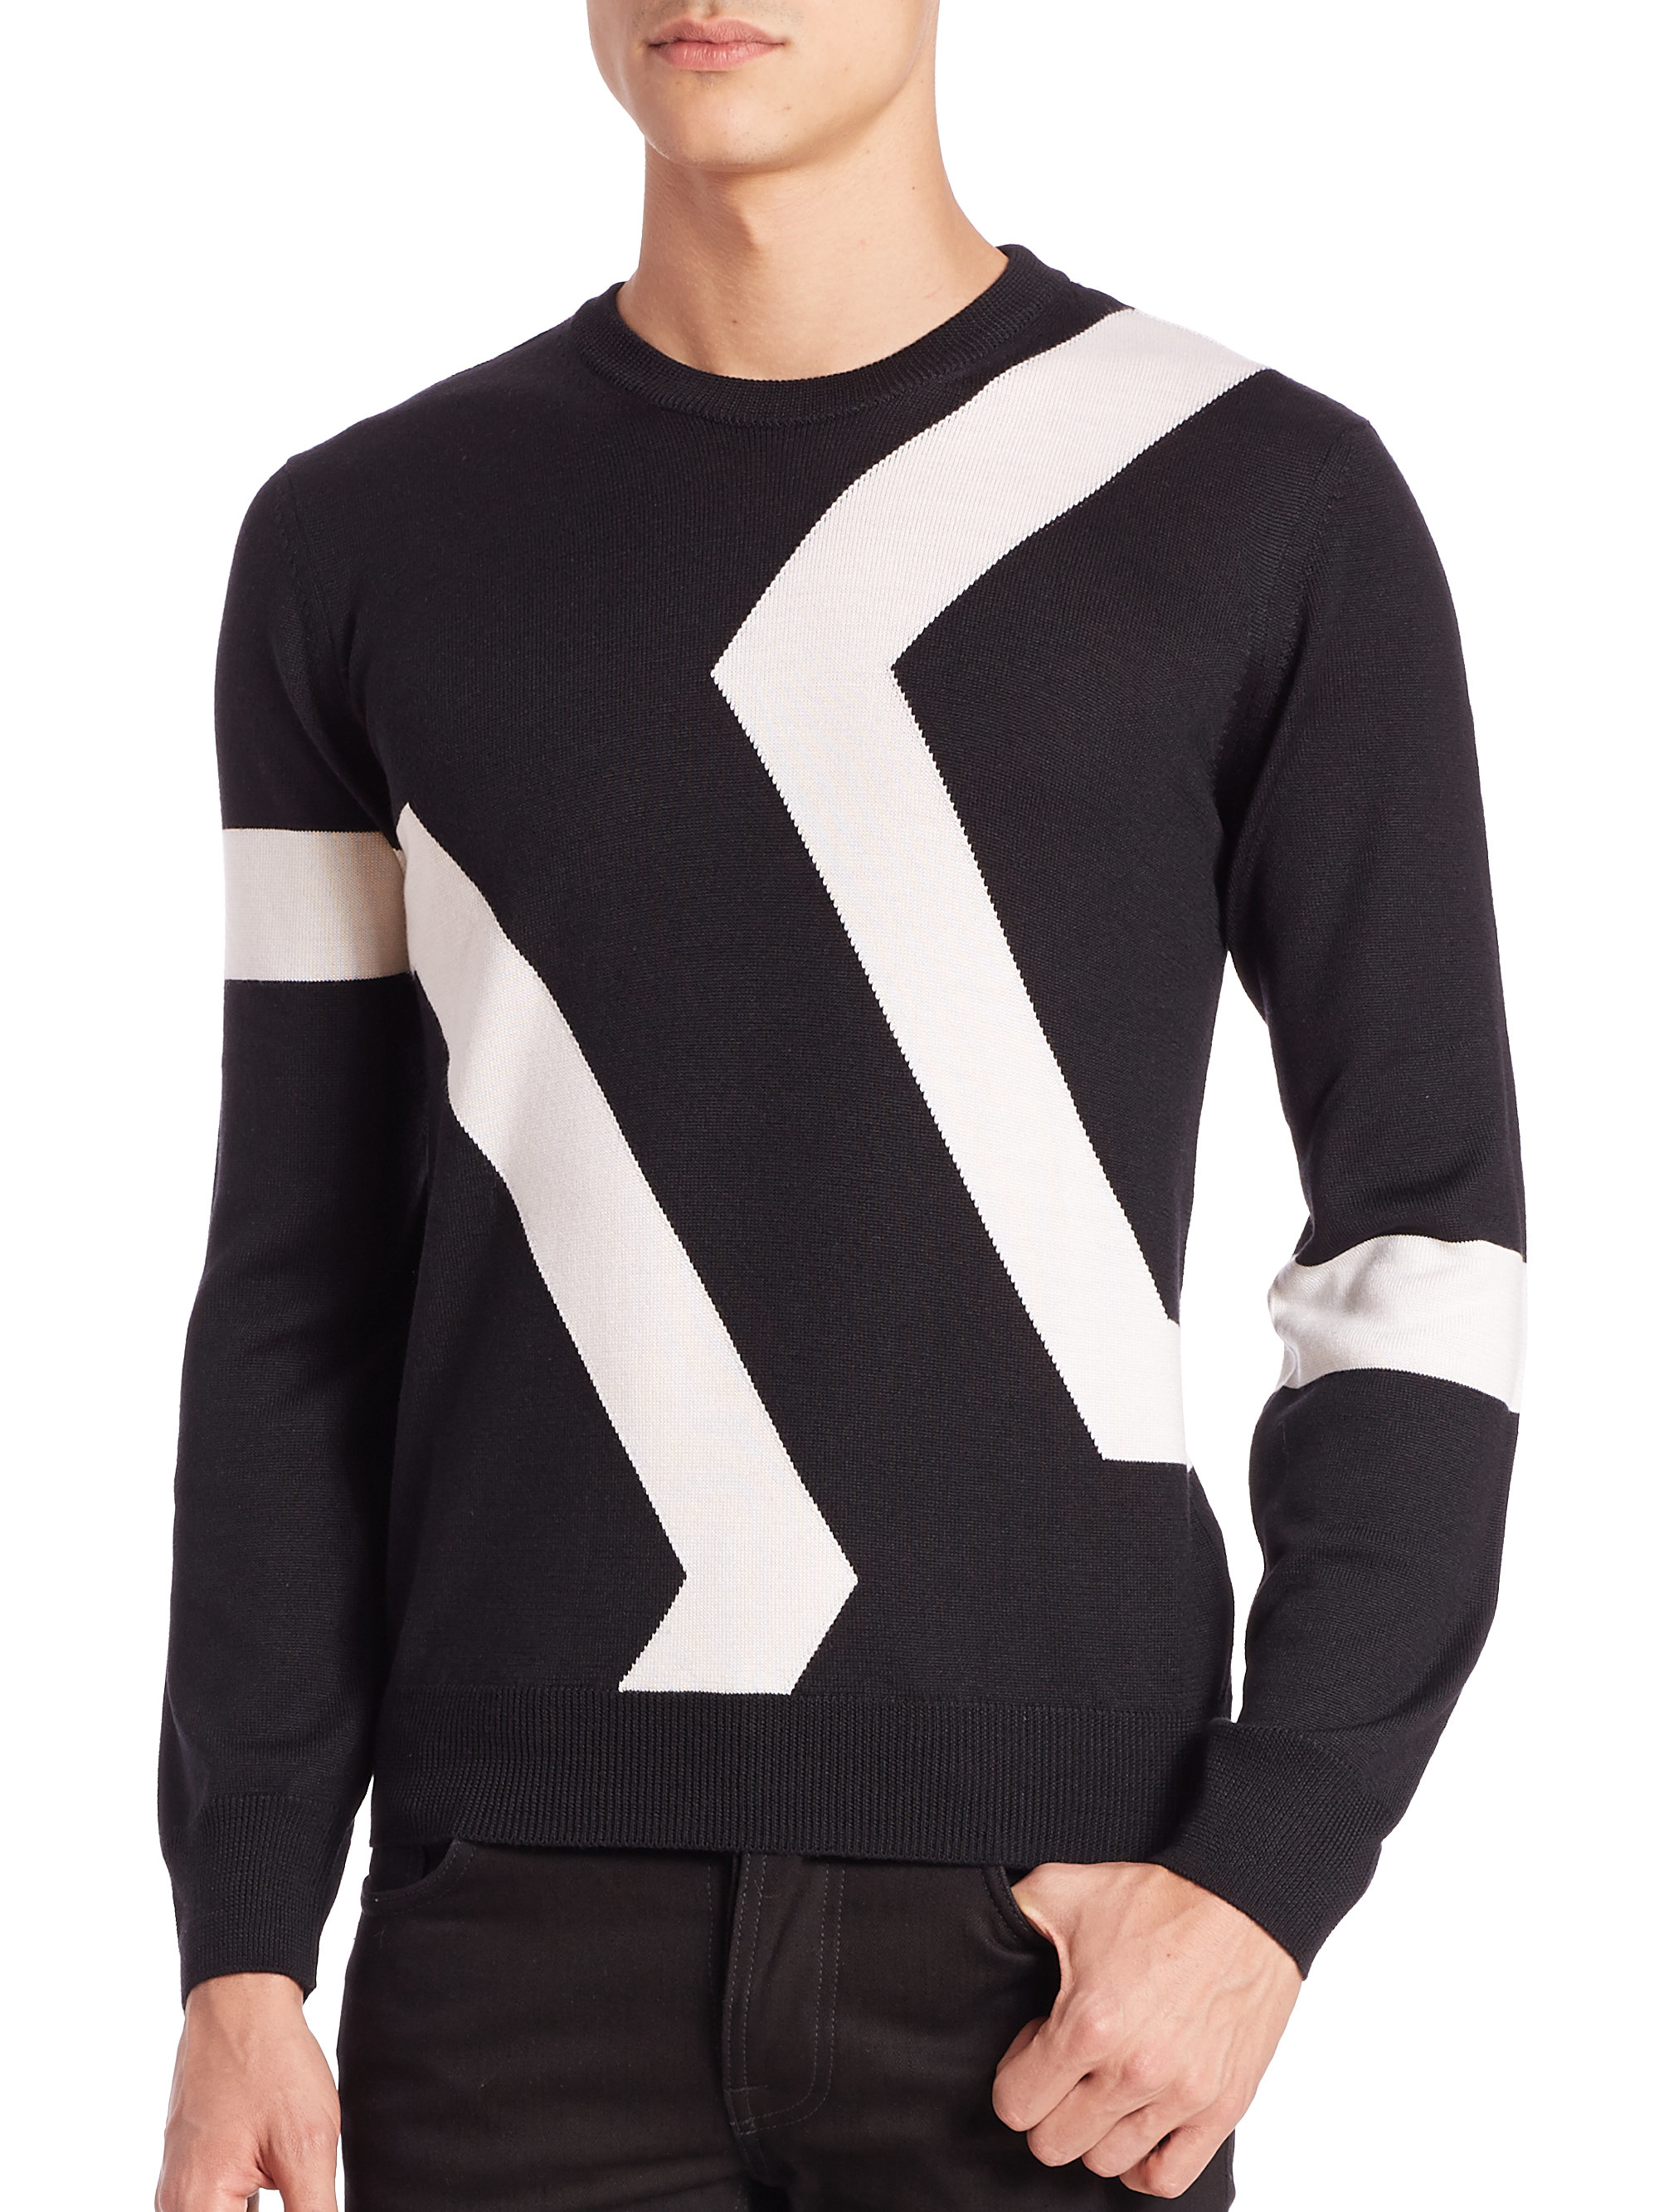 Lyst - Kent & Curwen Hexagon Intarsia Knit Sweater in Black for Men